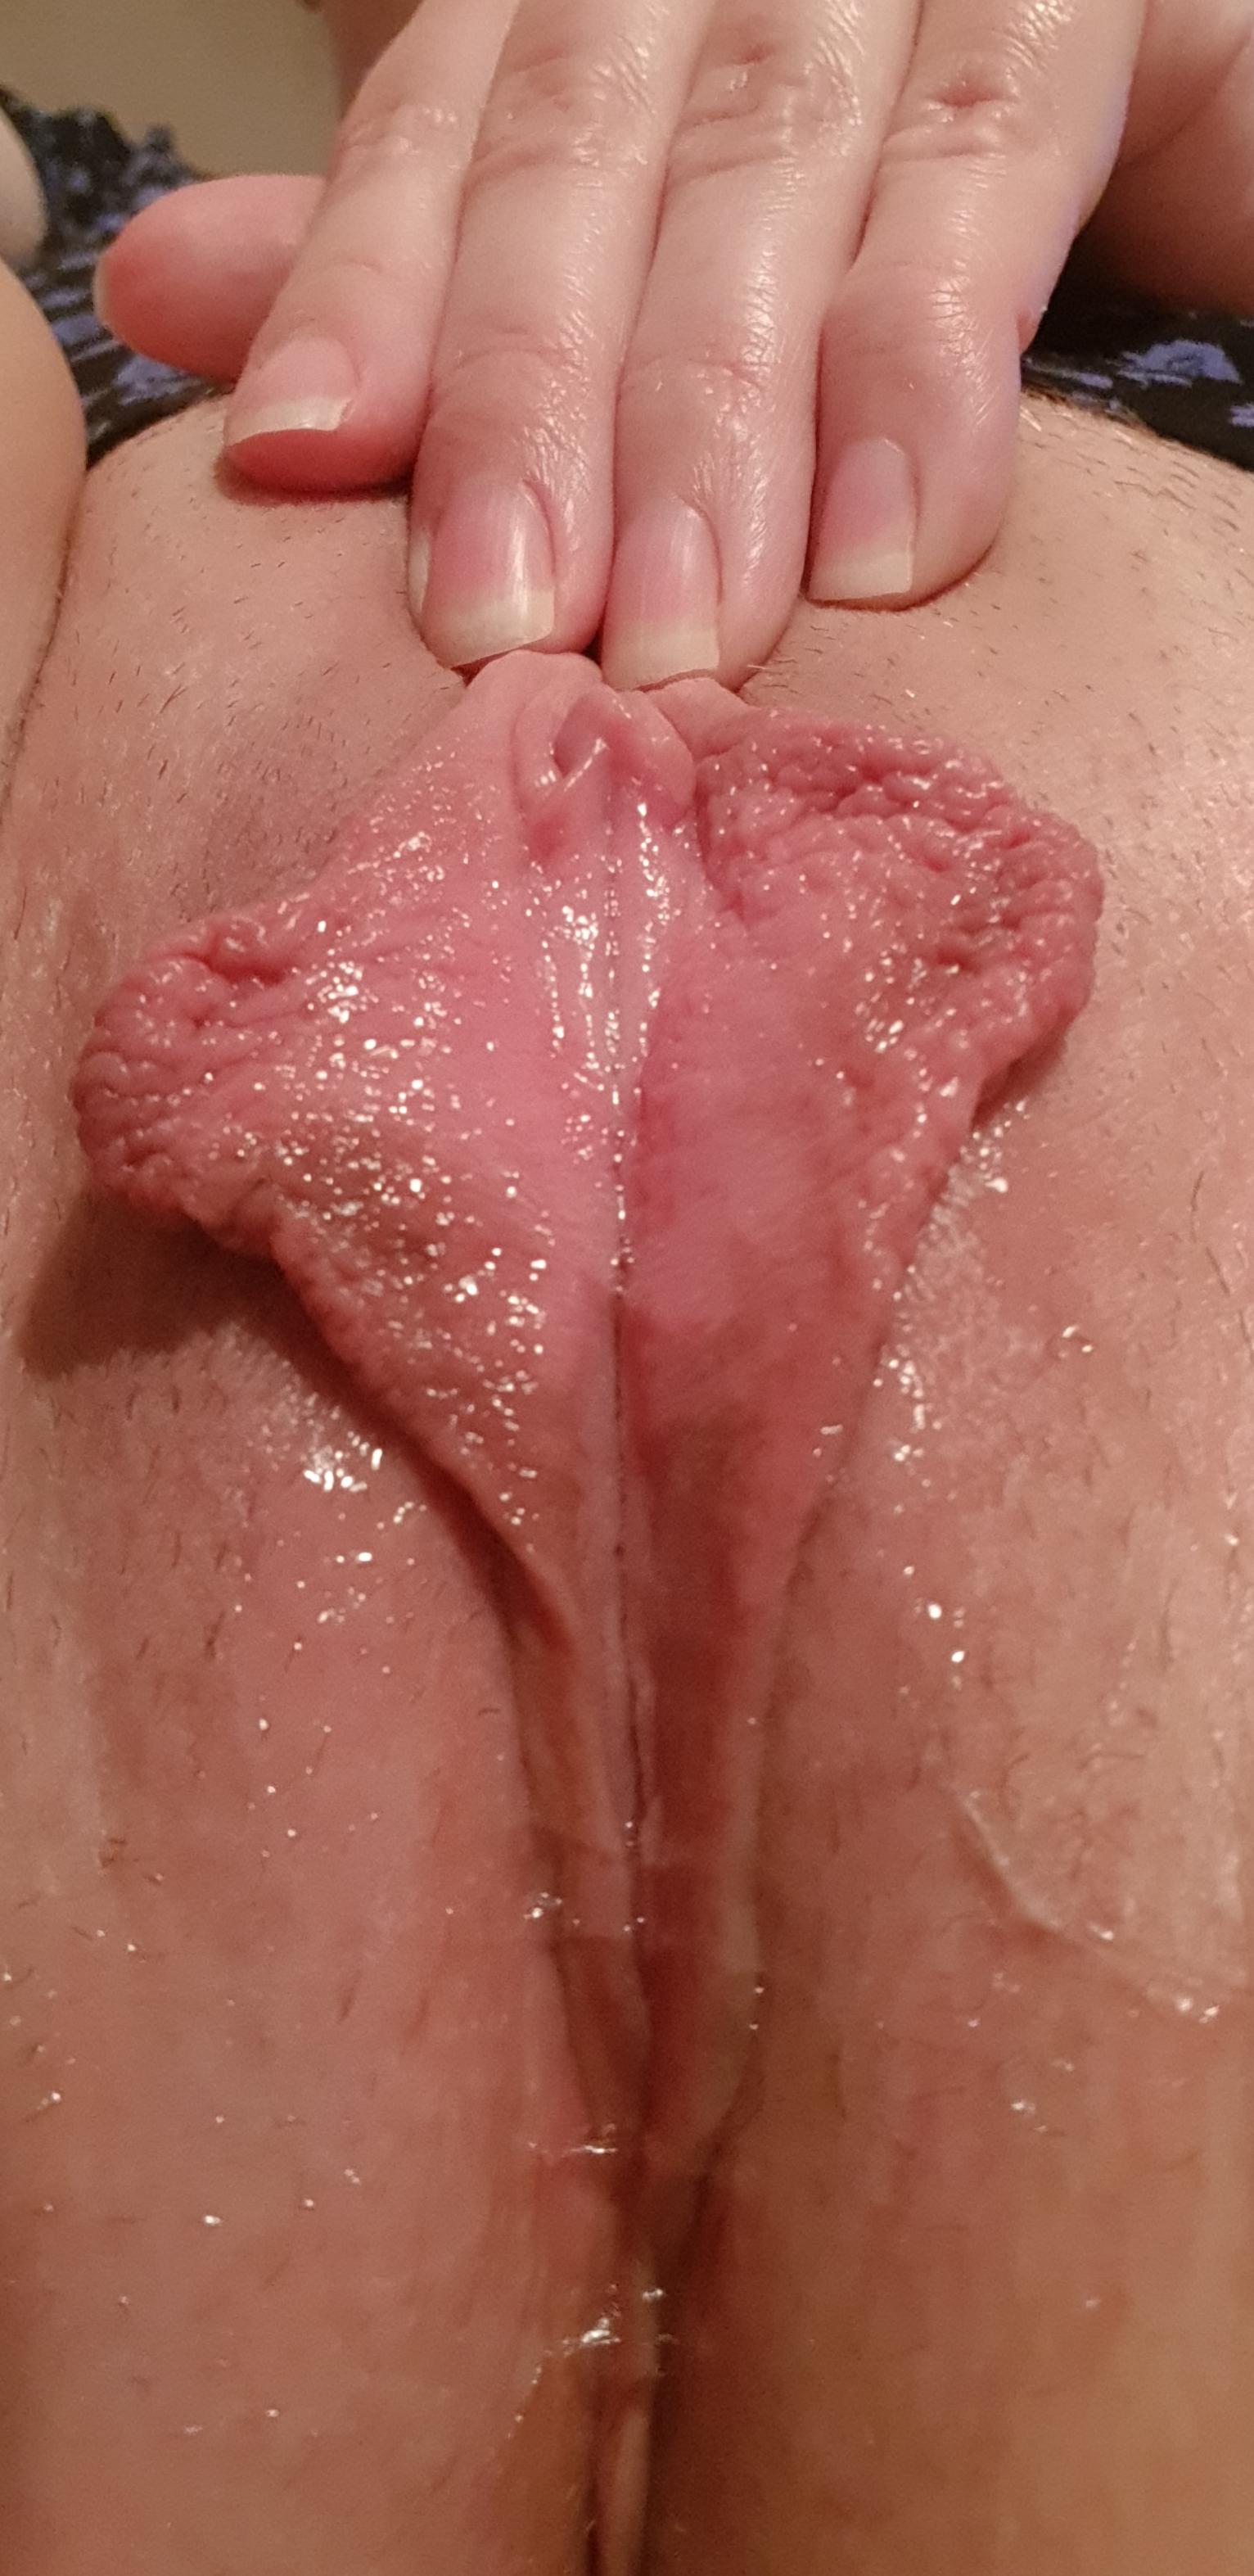 Huge Fat Wet Pussy Selfie - Do you like really wet pussy lips